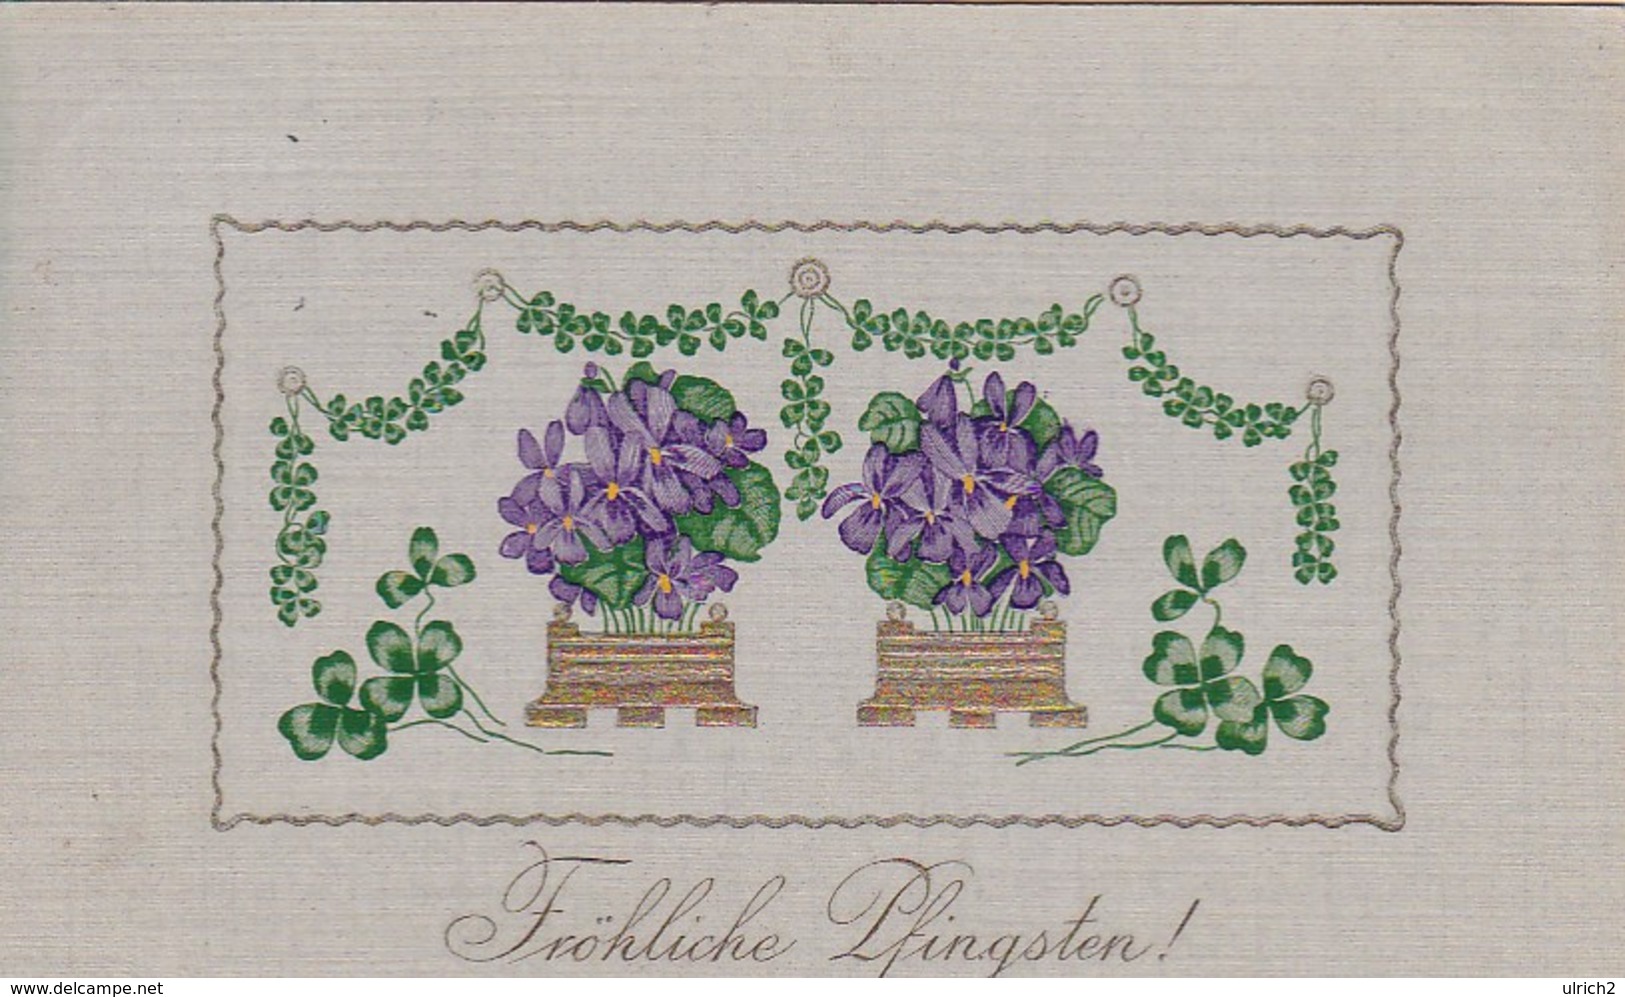 AK Fröhliche Pfingsten - Klee Blumen - Golddruck Reliefdruck - 1900 (49063) - Pentecôte